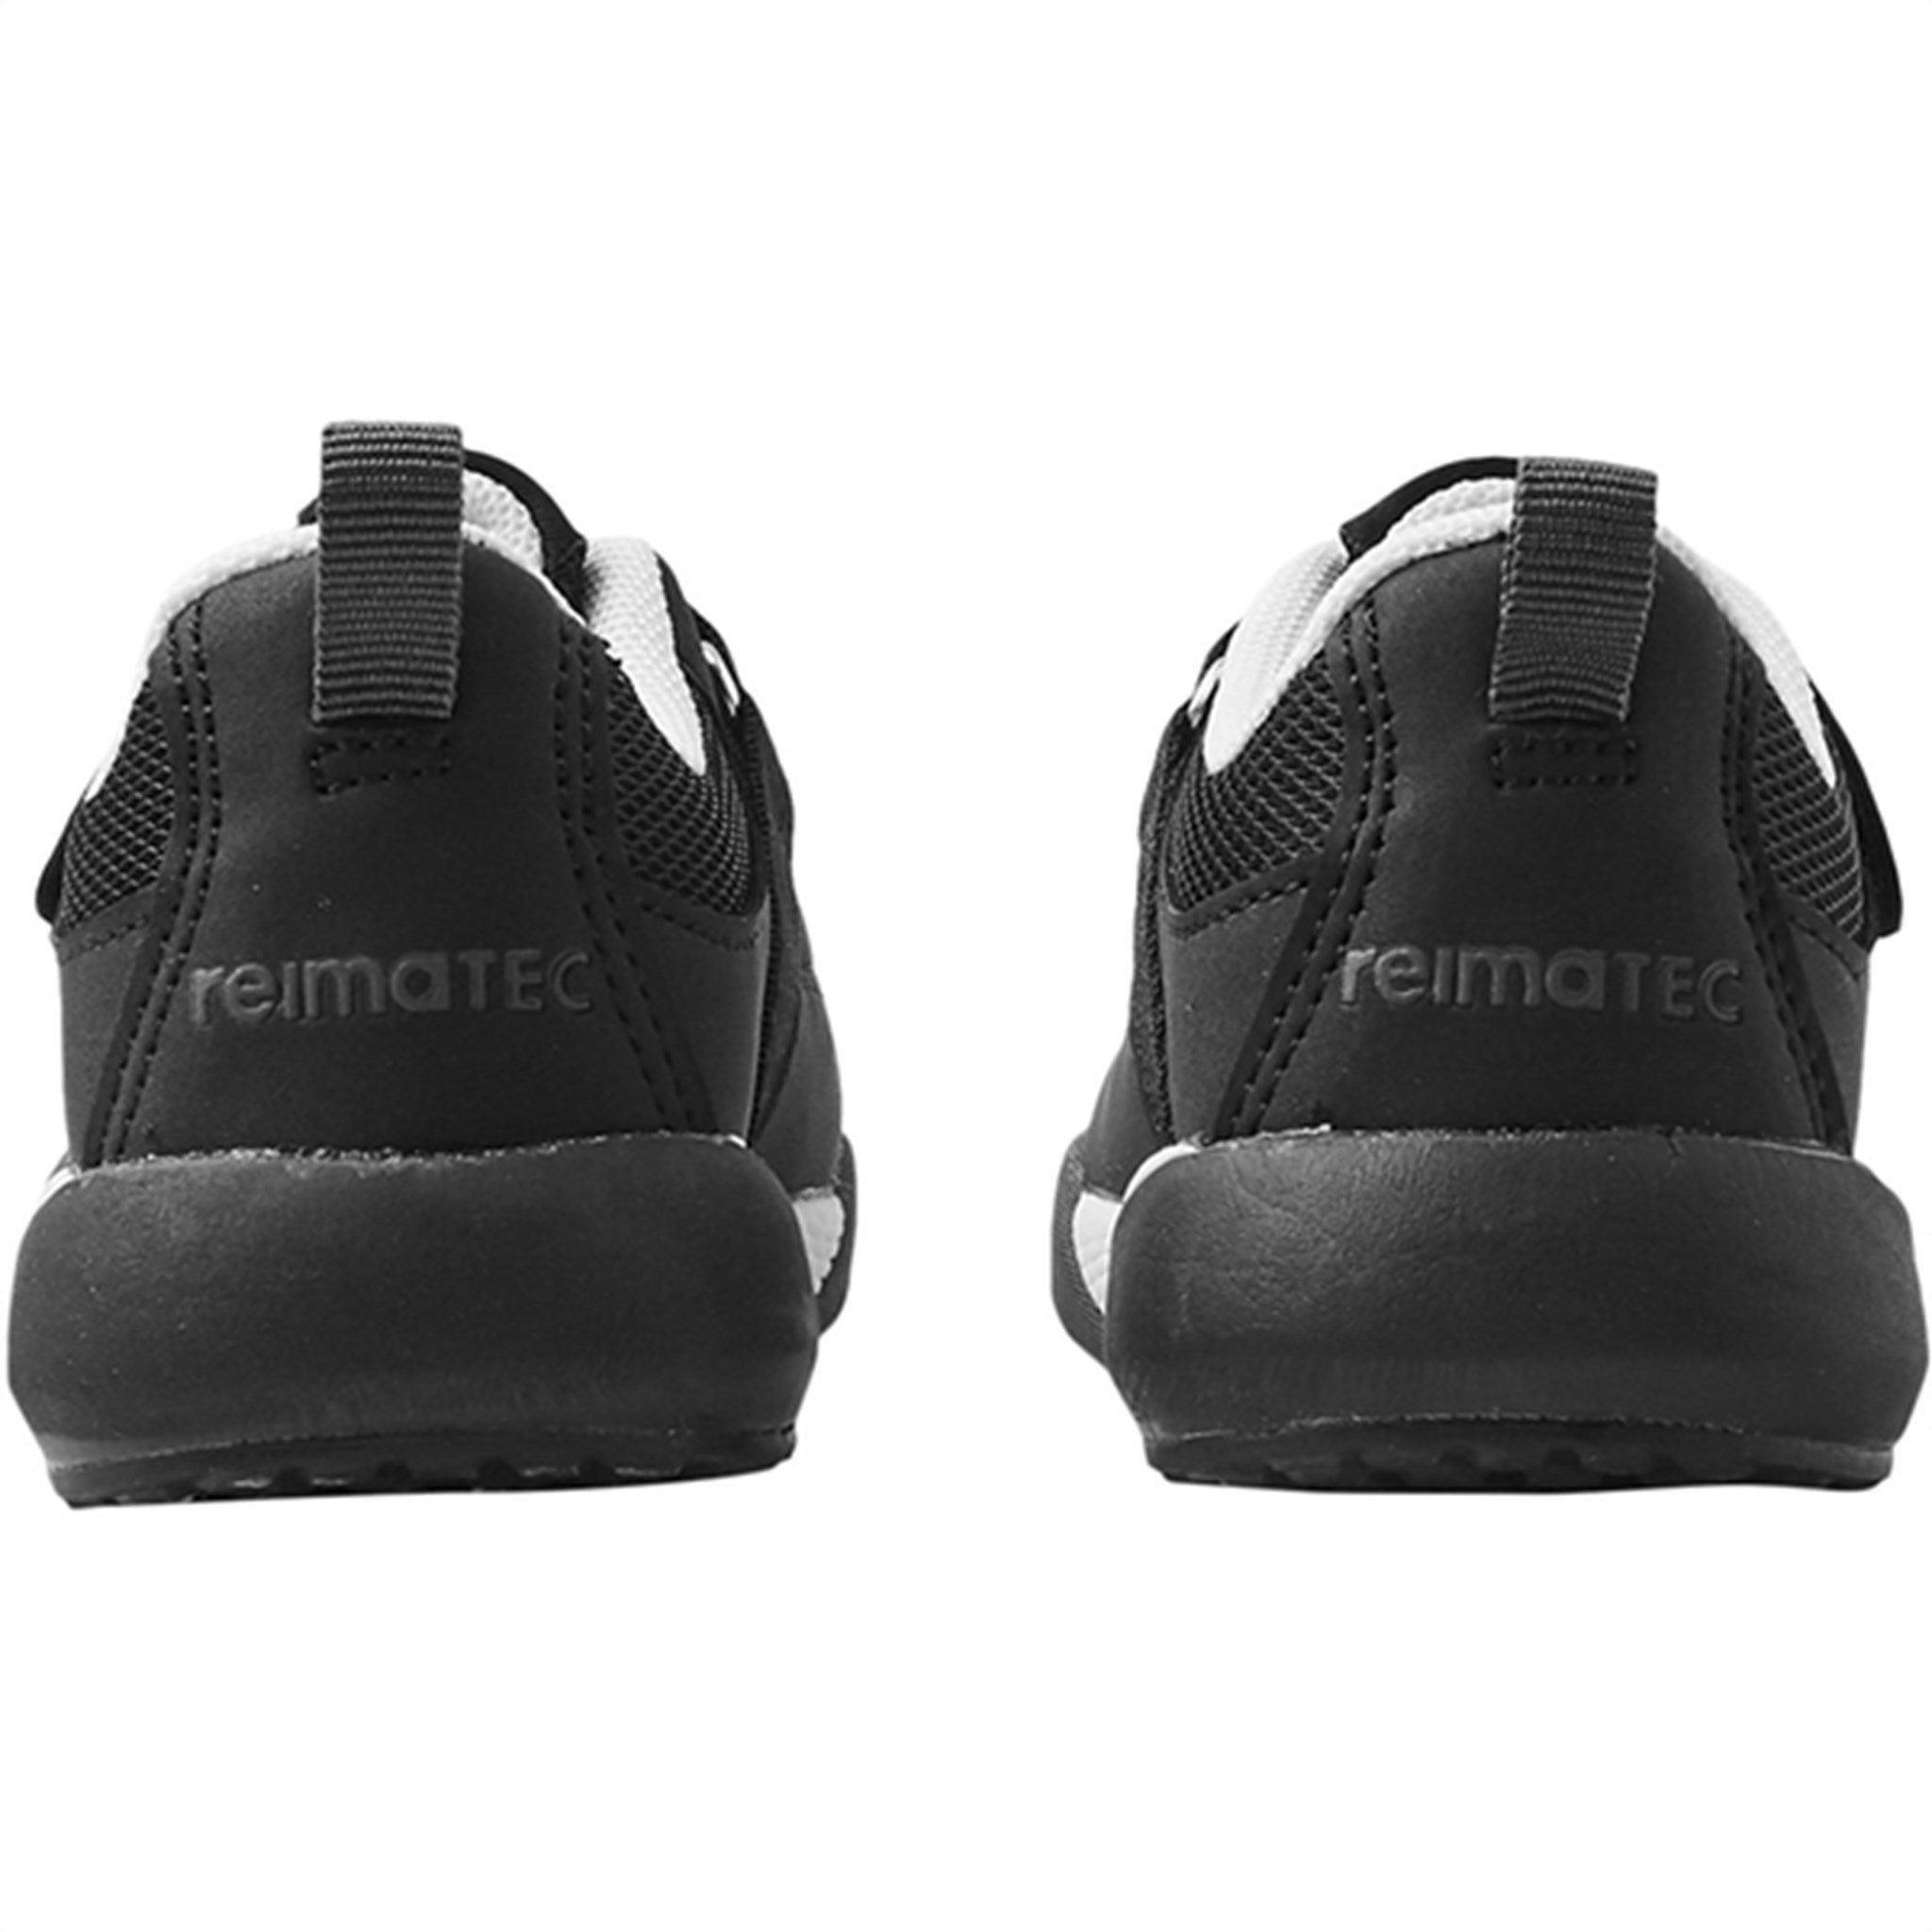 Reima Reimatec Vanntett Sneakers Kiirus Black 8